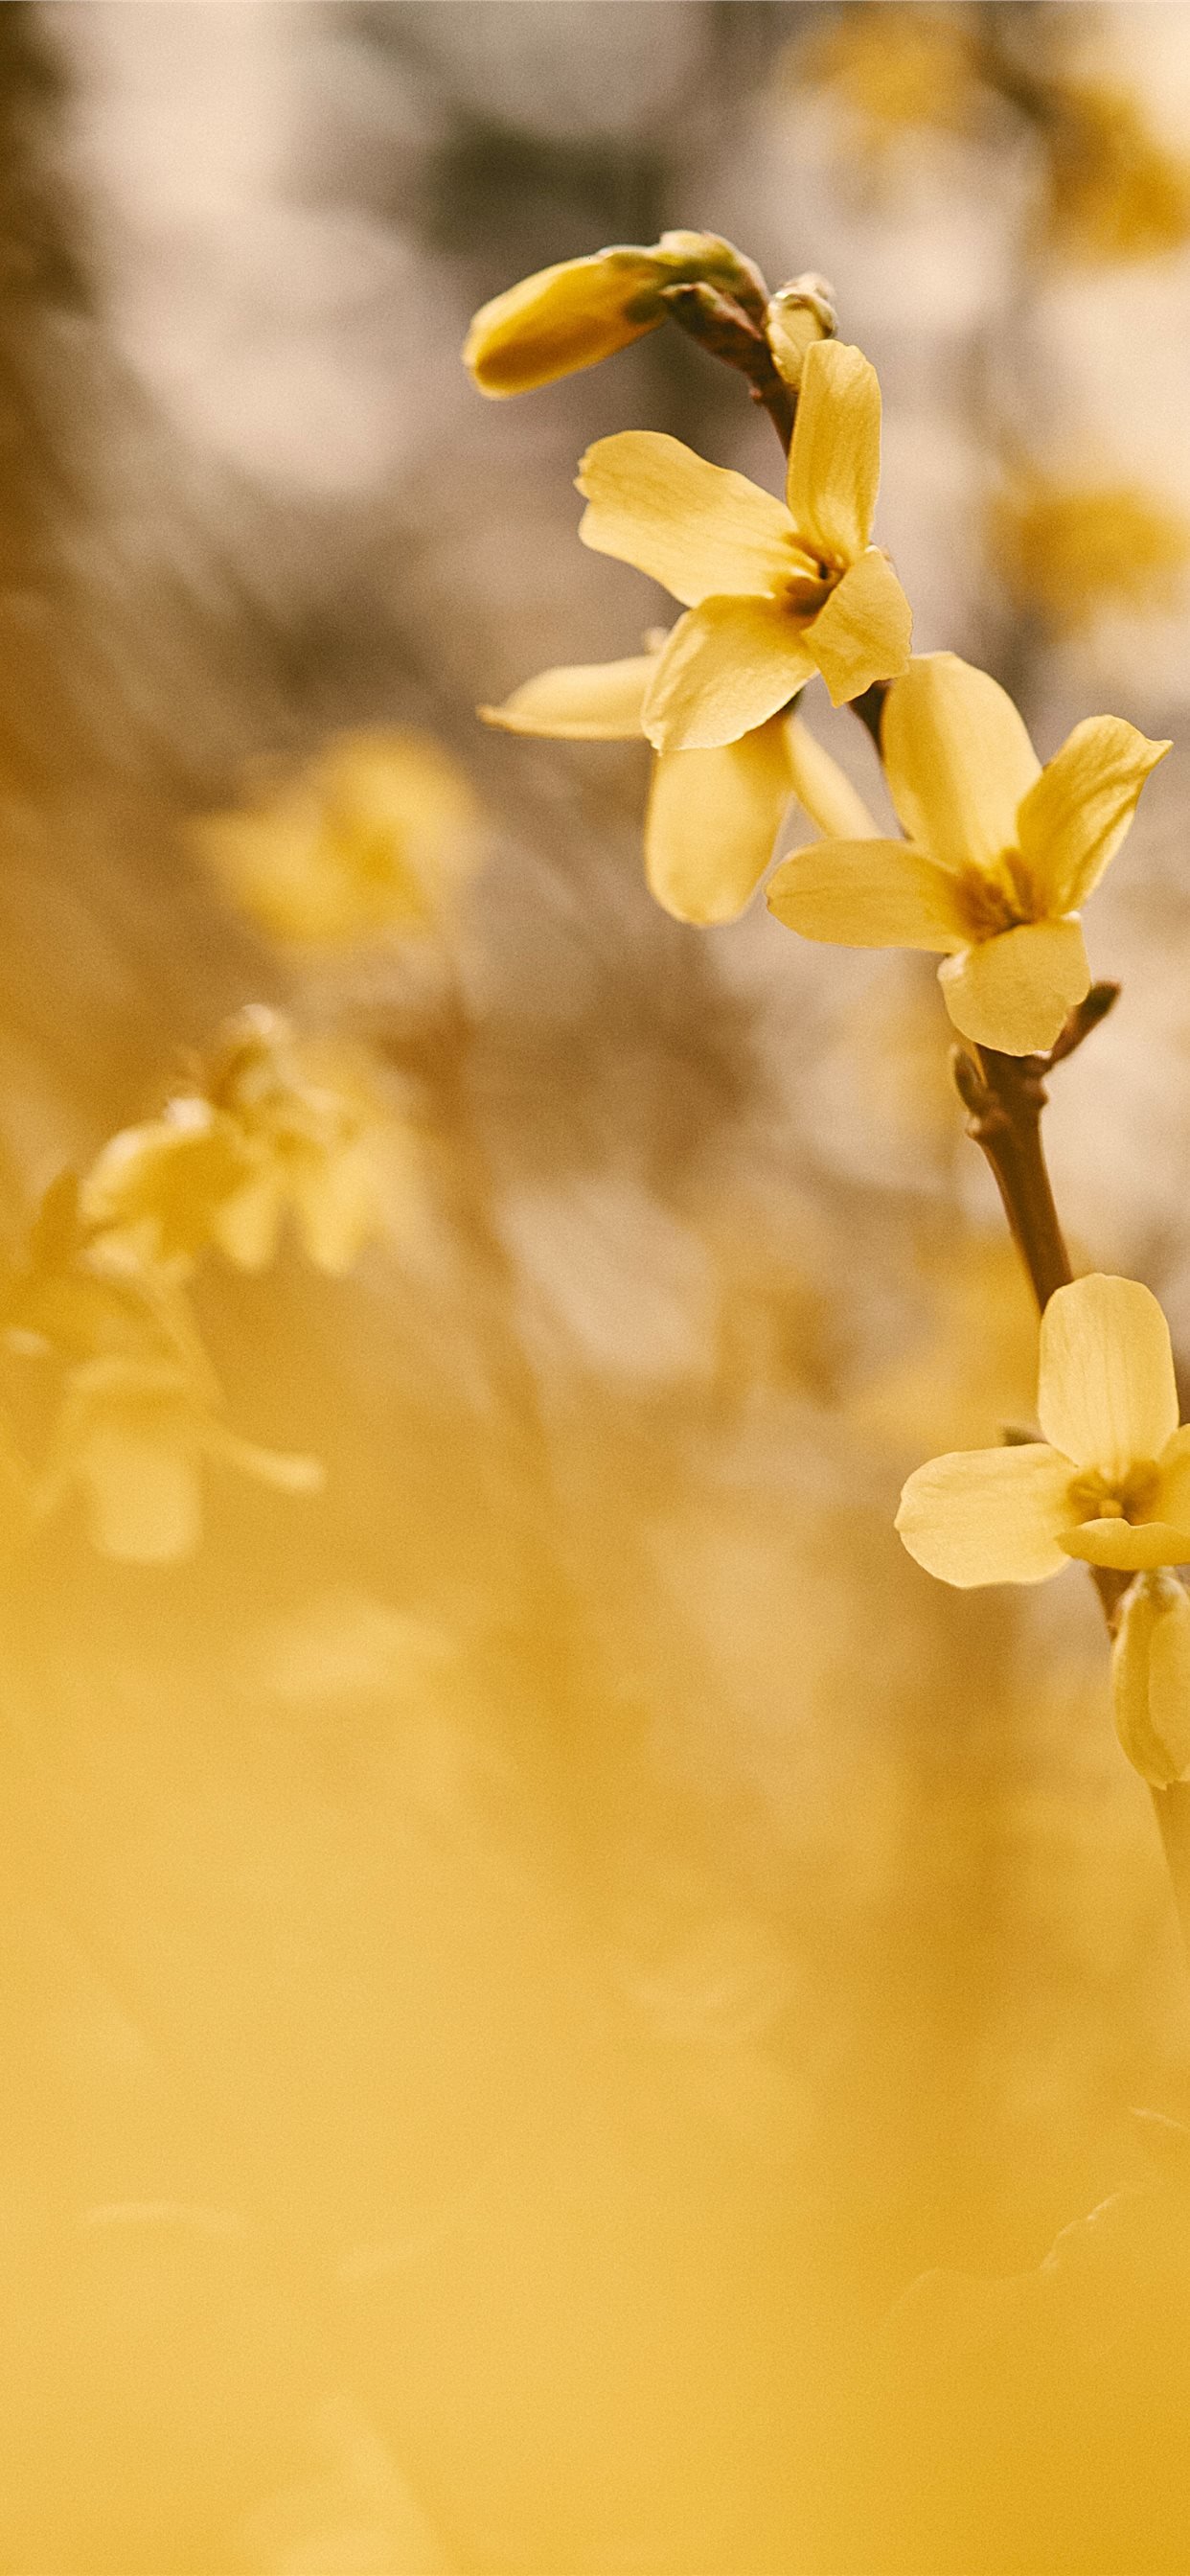 yellow flower in tilt shift lens iPhone X Wallpaper Free Download